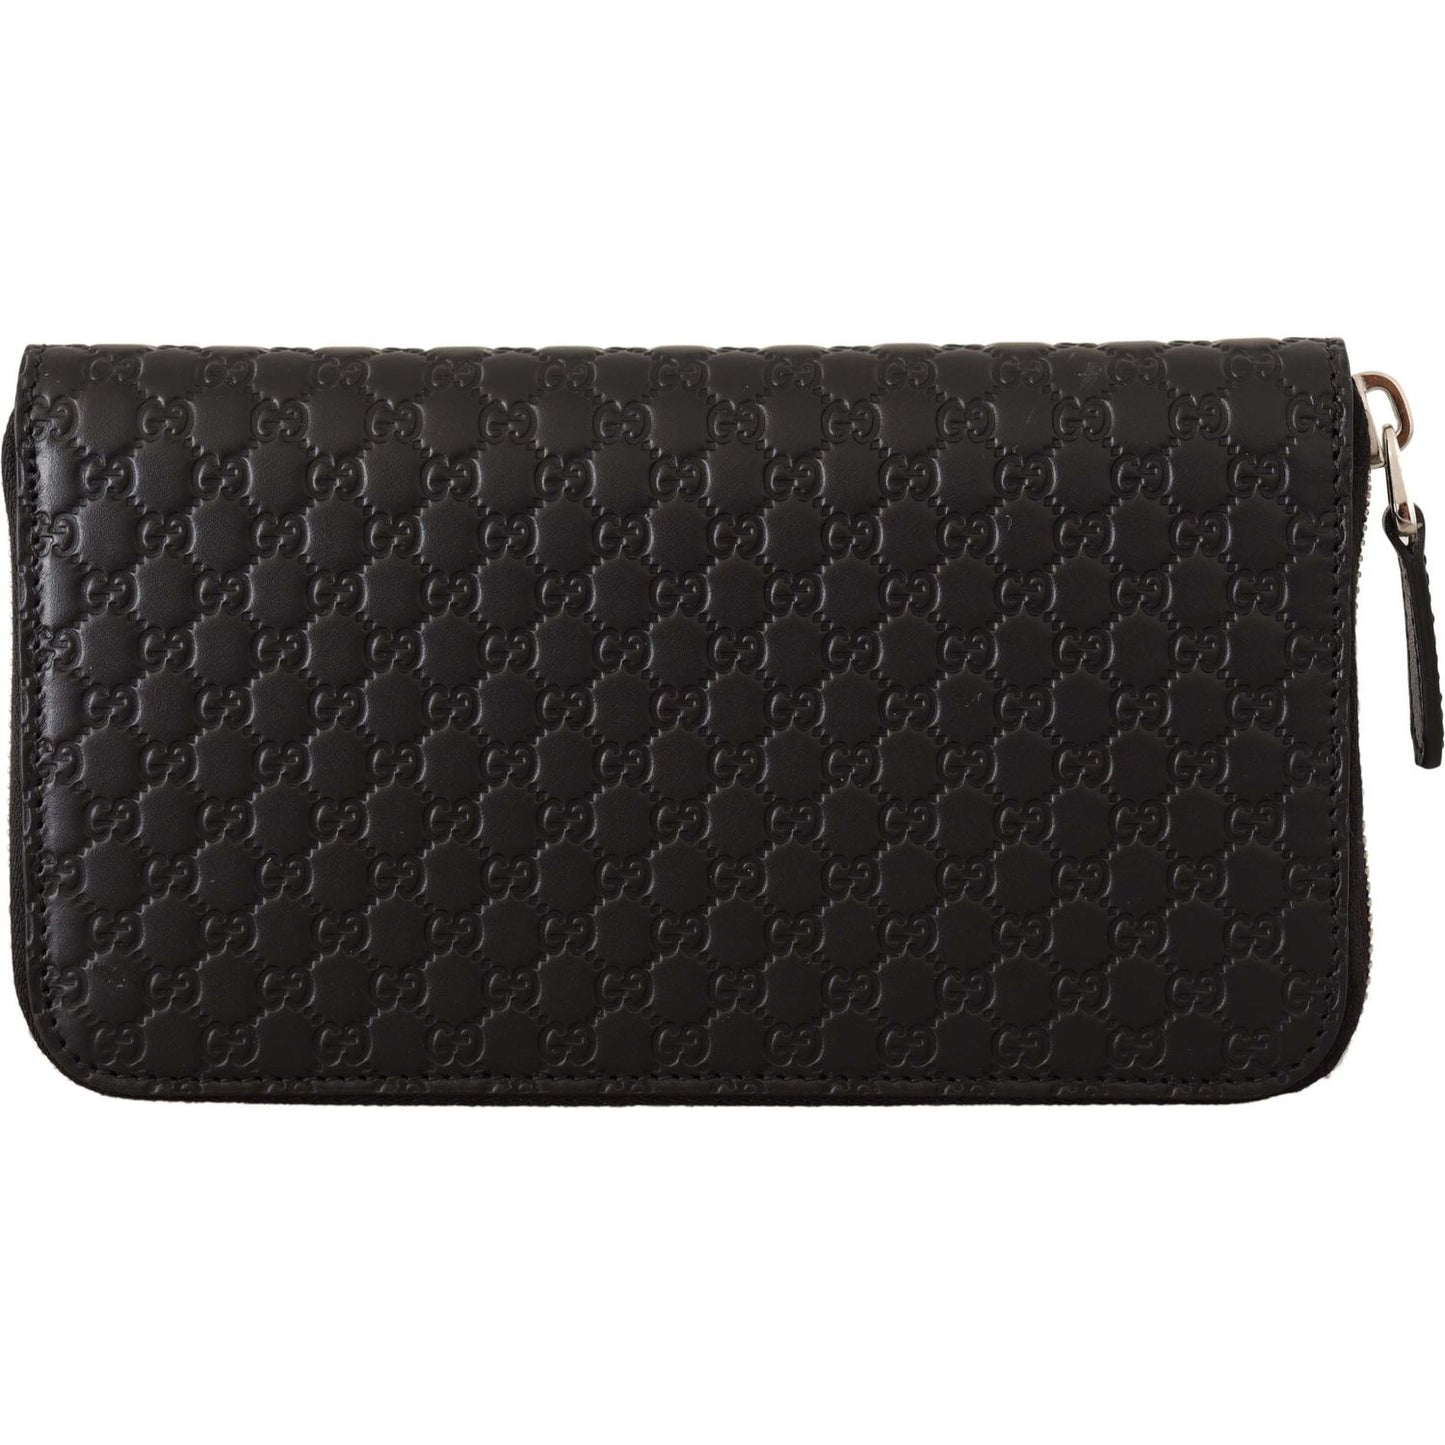 Gucci Elegant Black Leather Zip-Around Wallet black-wallet-microguccissima-leather-zipper-wallet IMG_7650-scaled-4e5fc004-9bd.jpg